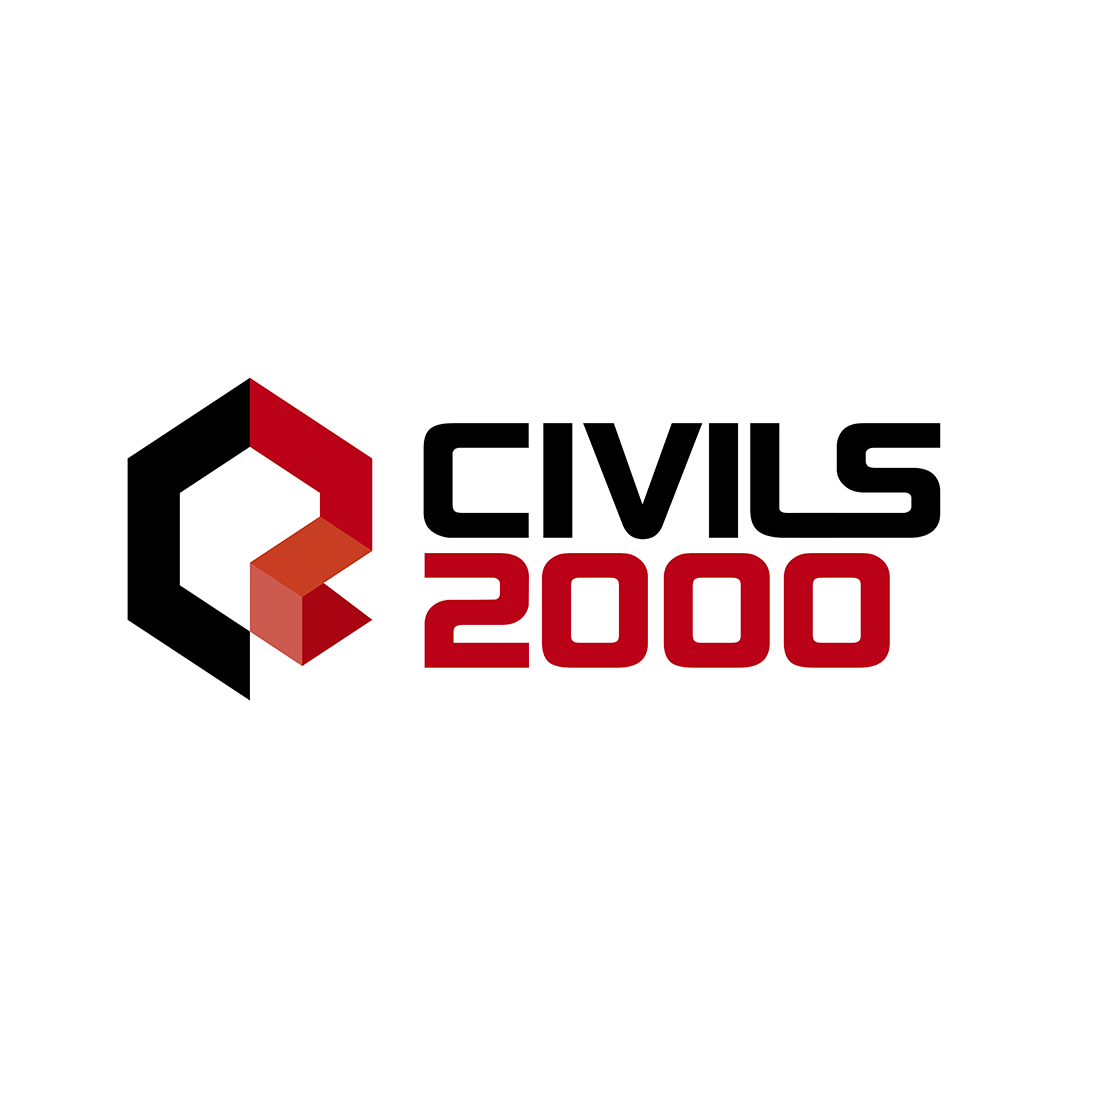 https://villagerfc.co.za/wp-content/uploads/2023/02/sponsors-square-civils-2000.png